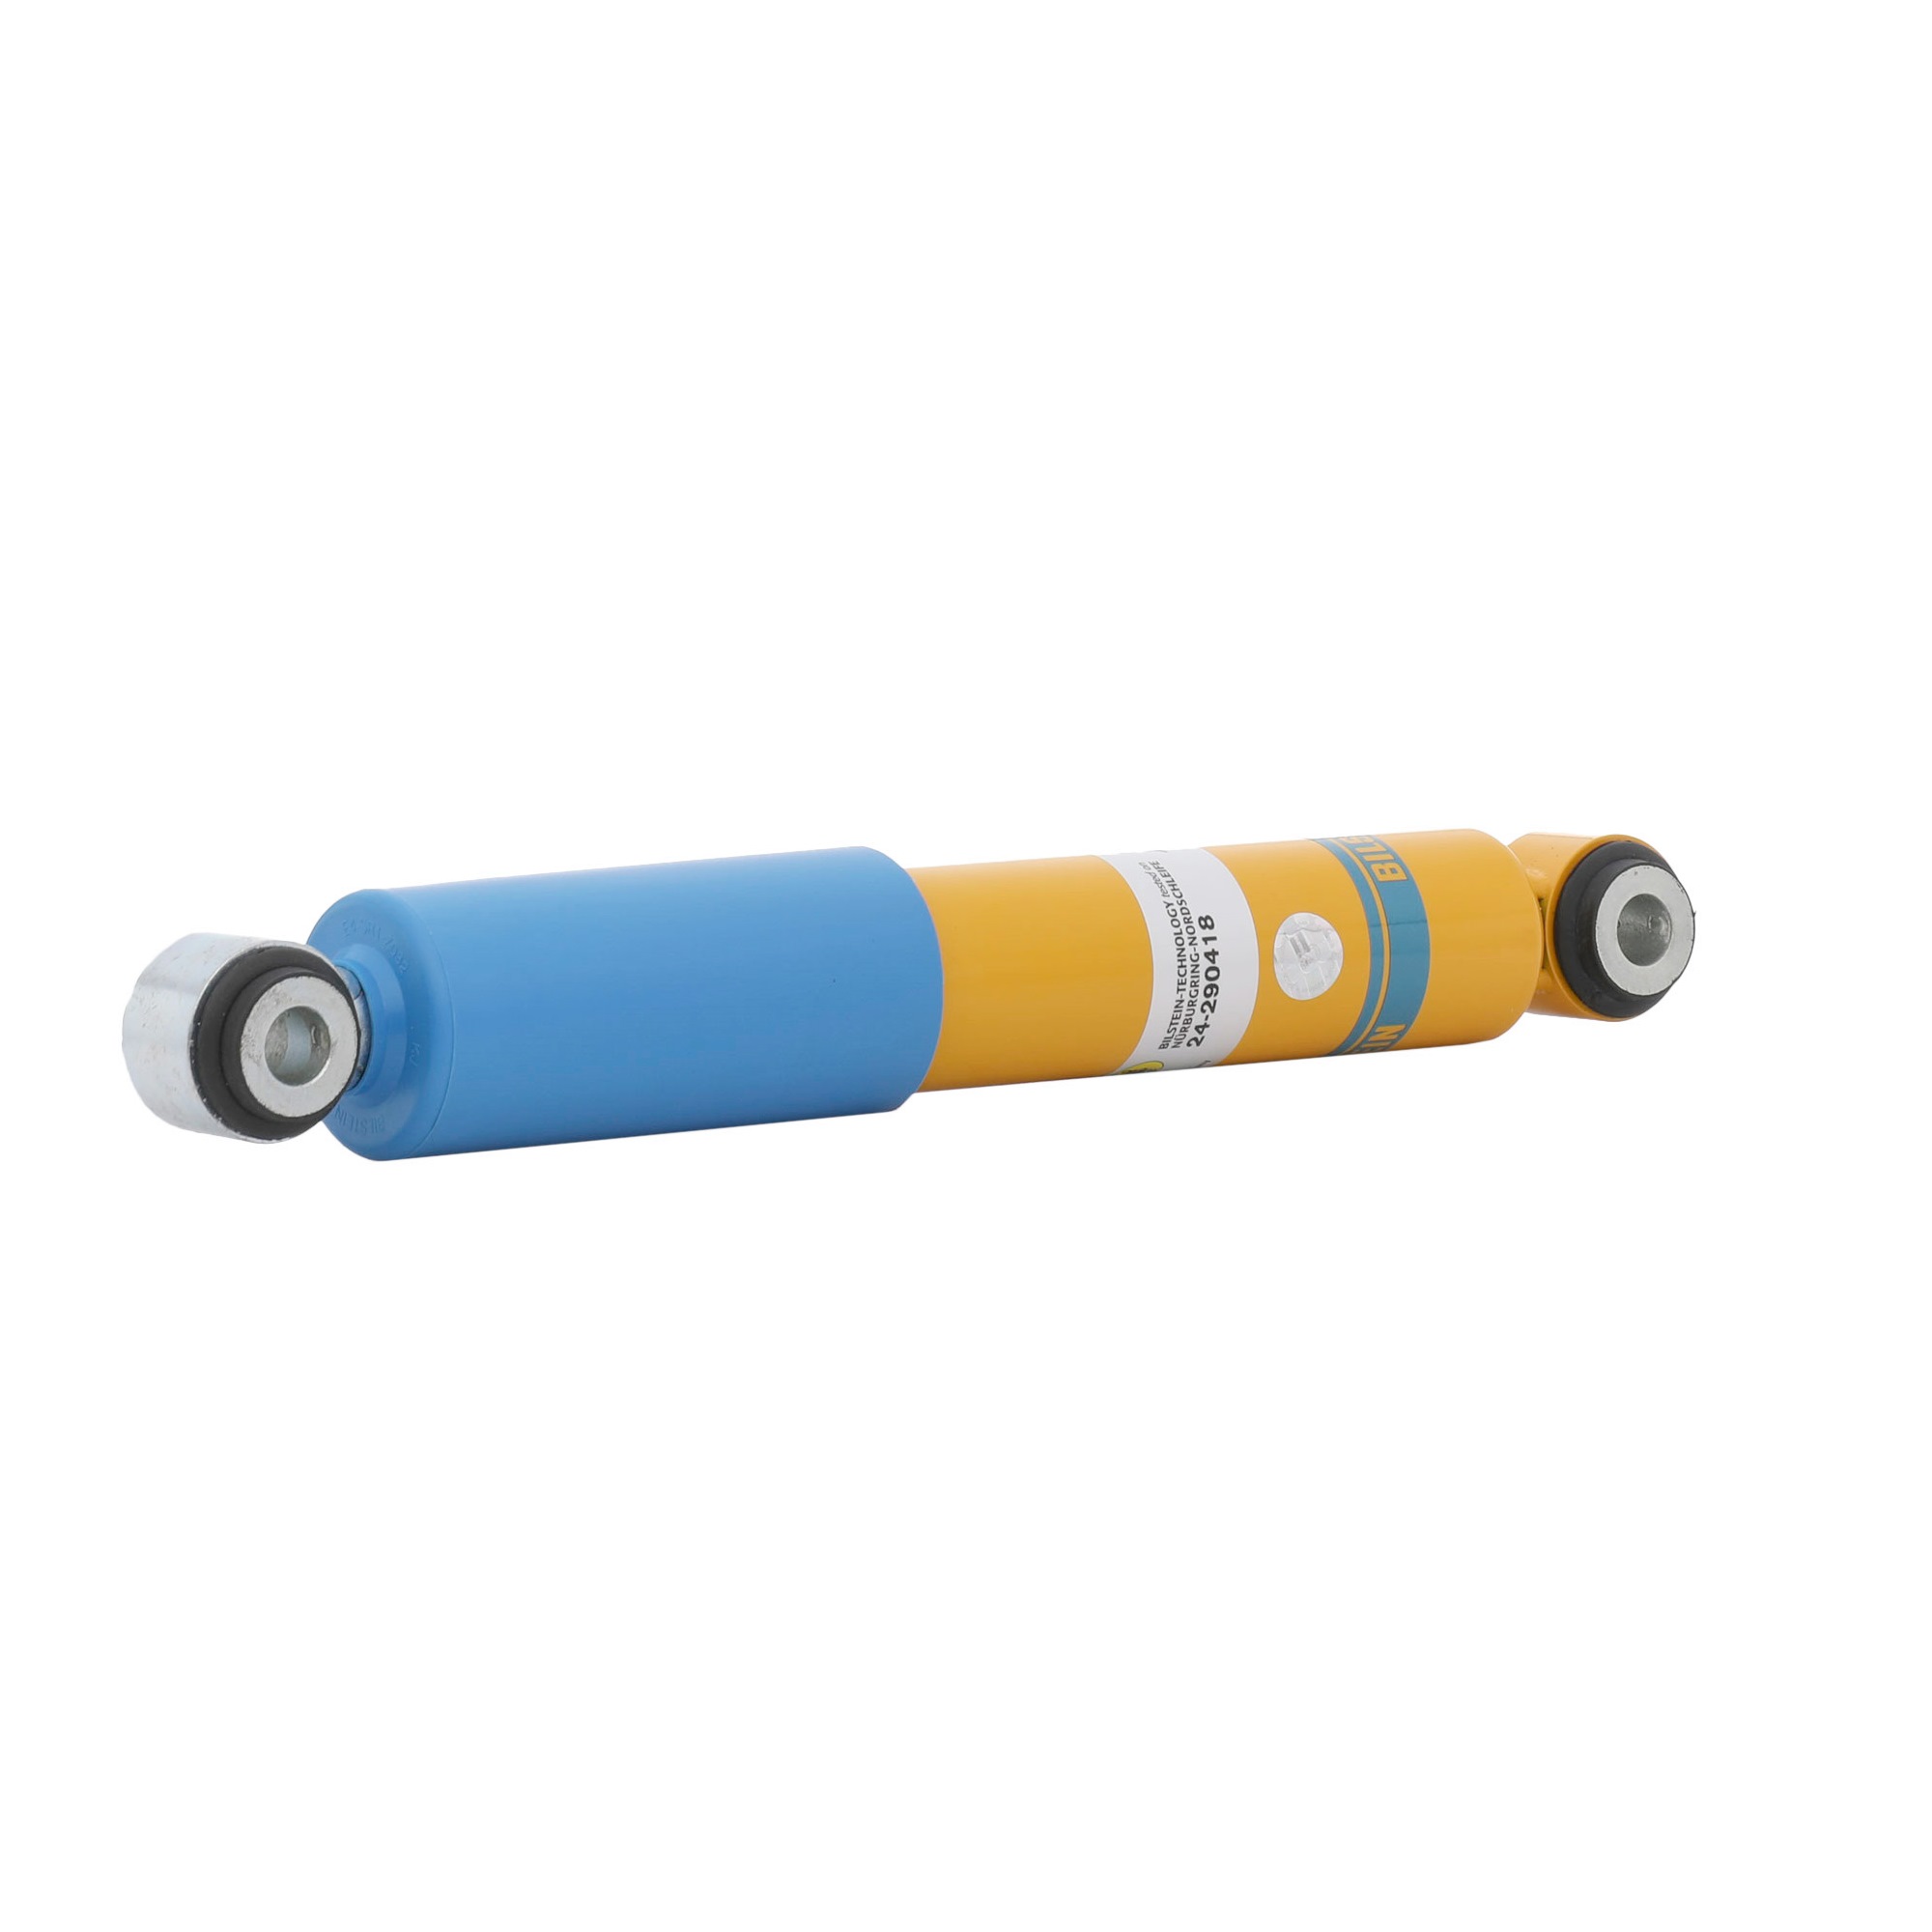 Buy Shock absorber BILSTEIN 24-290418 - Damping parts PEUGEOT TRAVELLER online